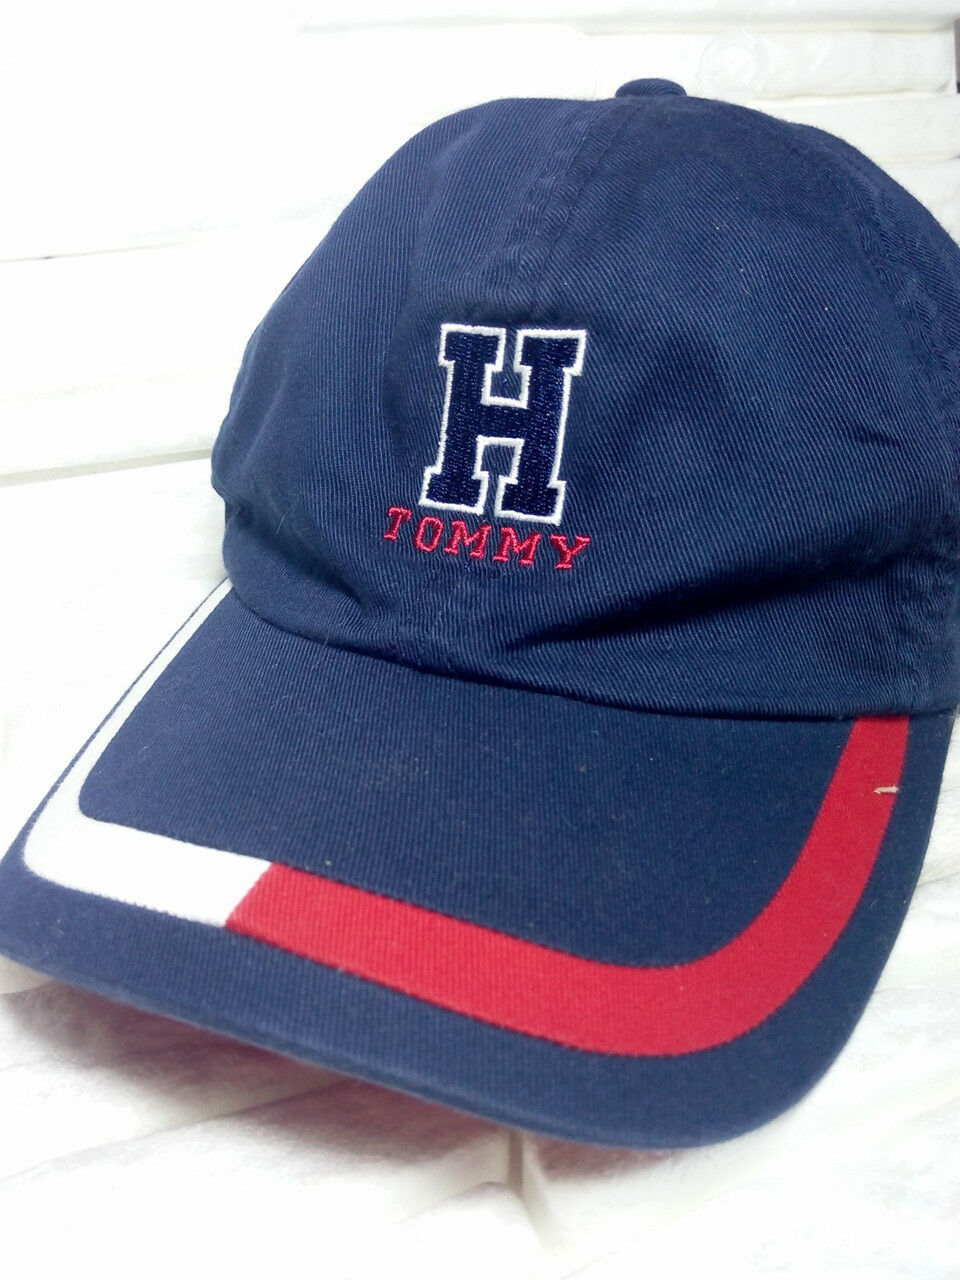 Tommy Hilfiger  BLUE cap baseball hat for child 100% cotton RP £ 40 S/M size